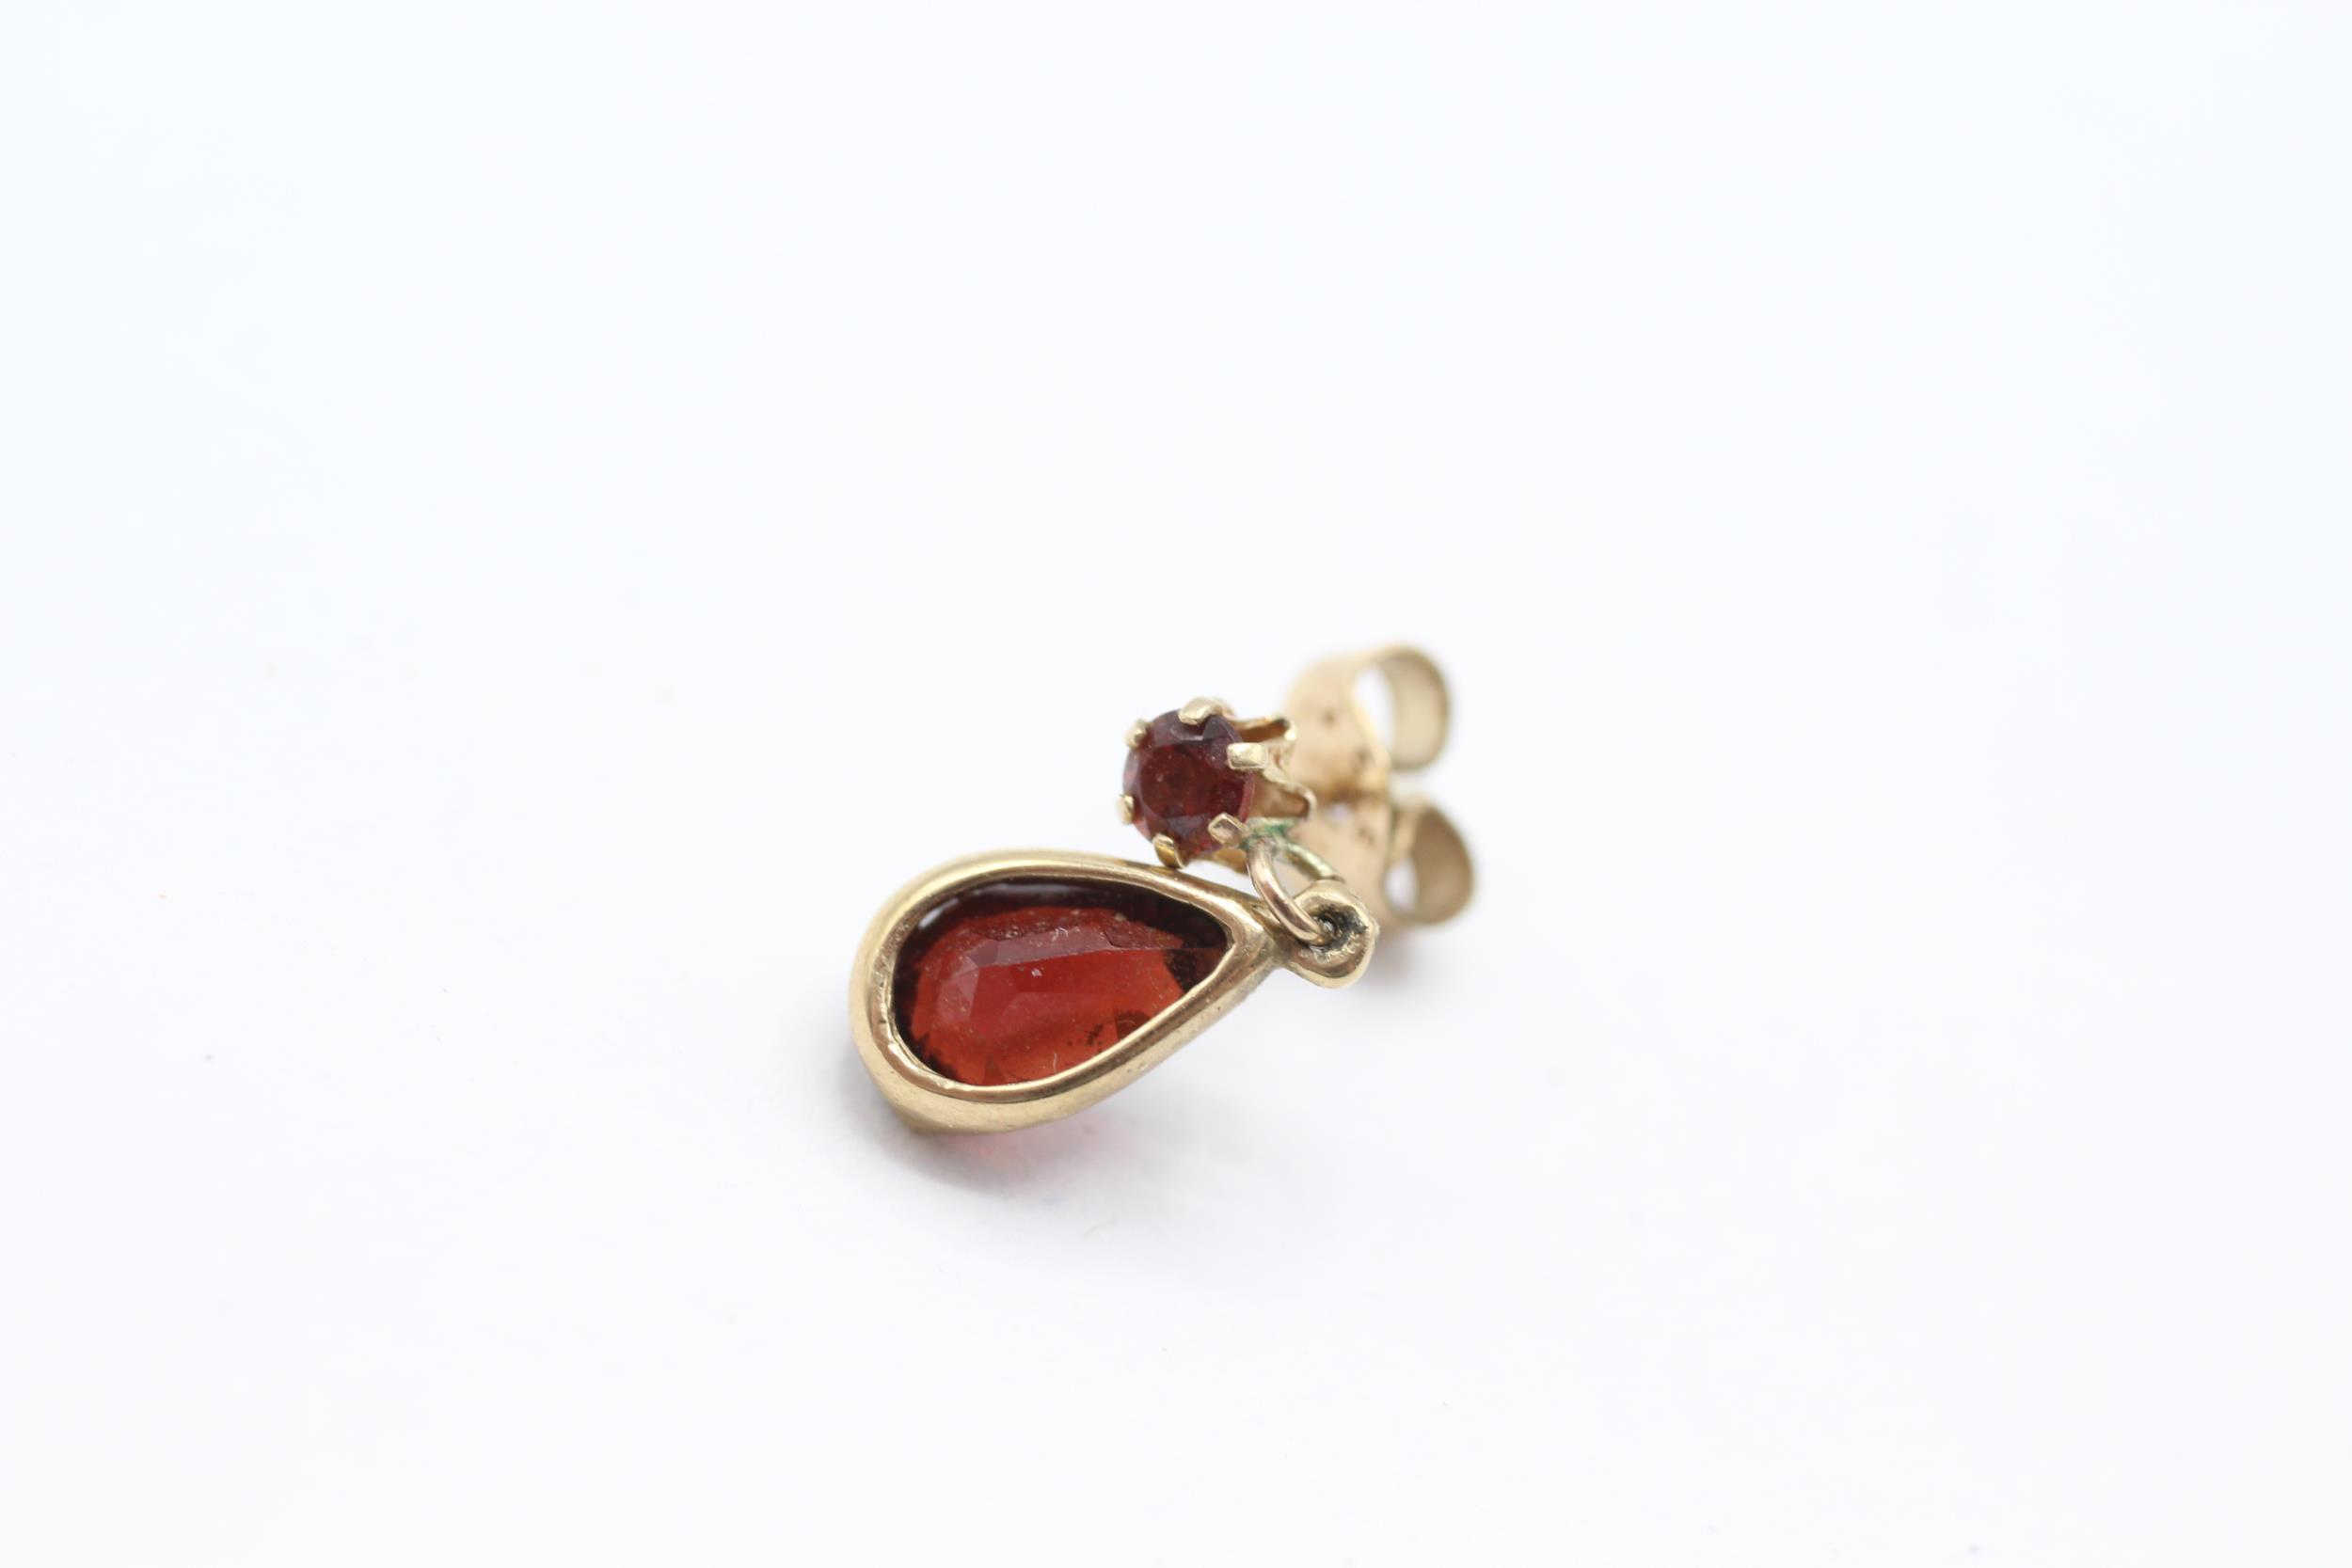 9ct gold pear cut garnet drop earrings with scroll backs - 1.3 g - Image 4 of 4